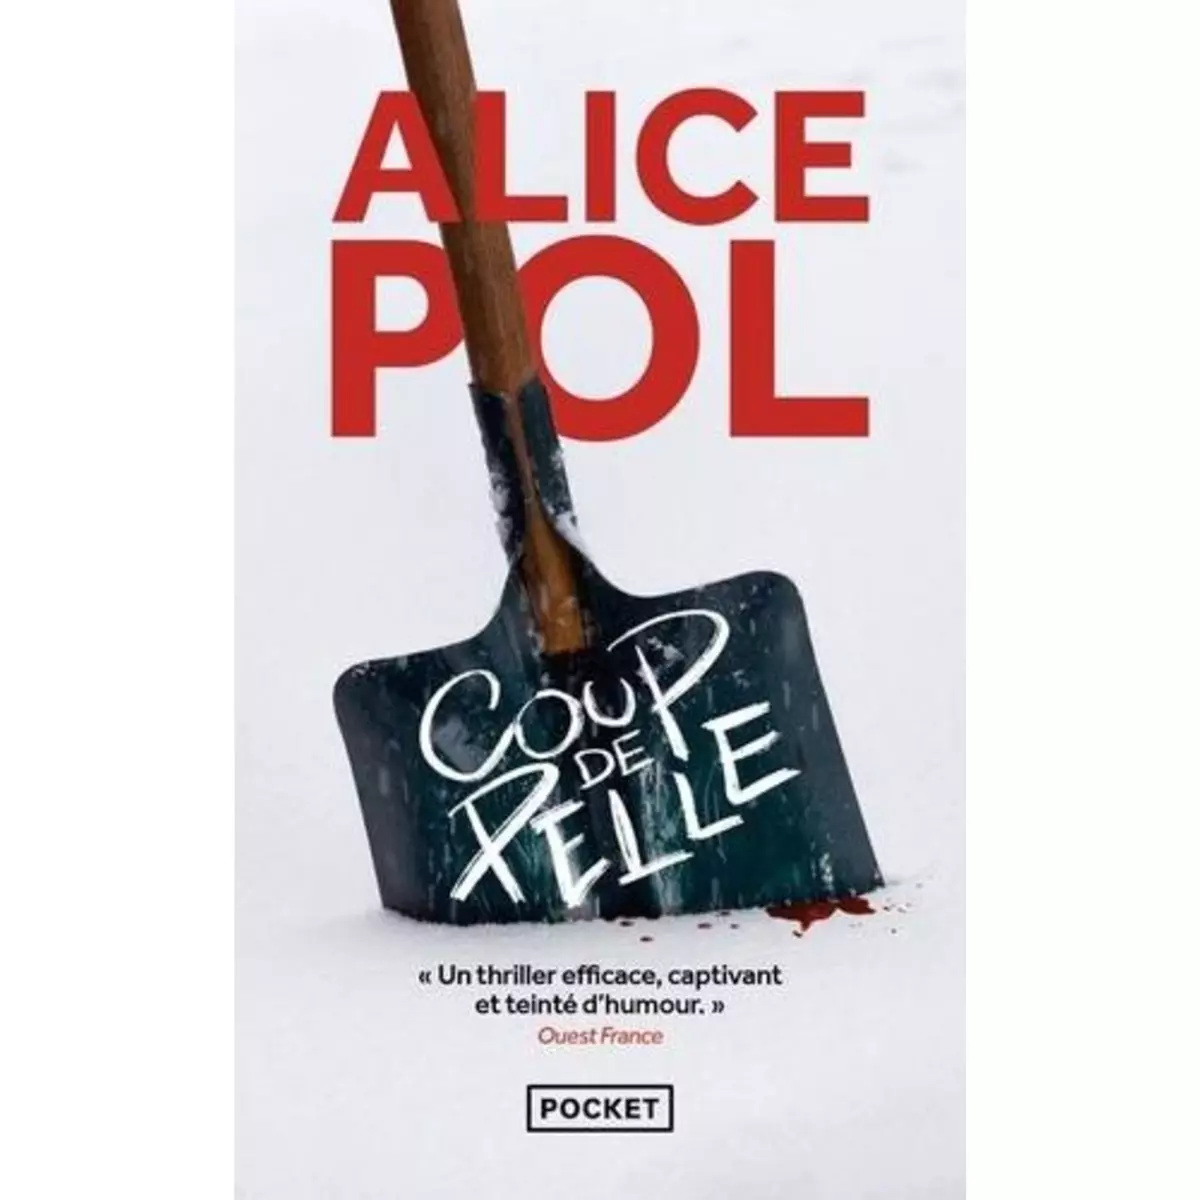  COUP DE PELLE, Pol Alice